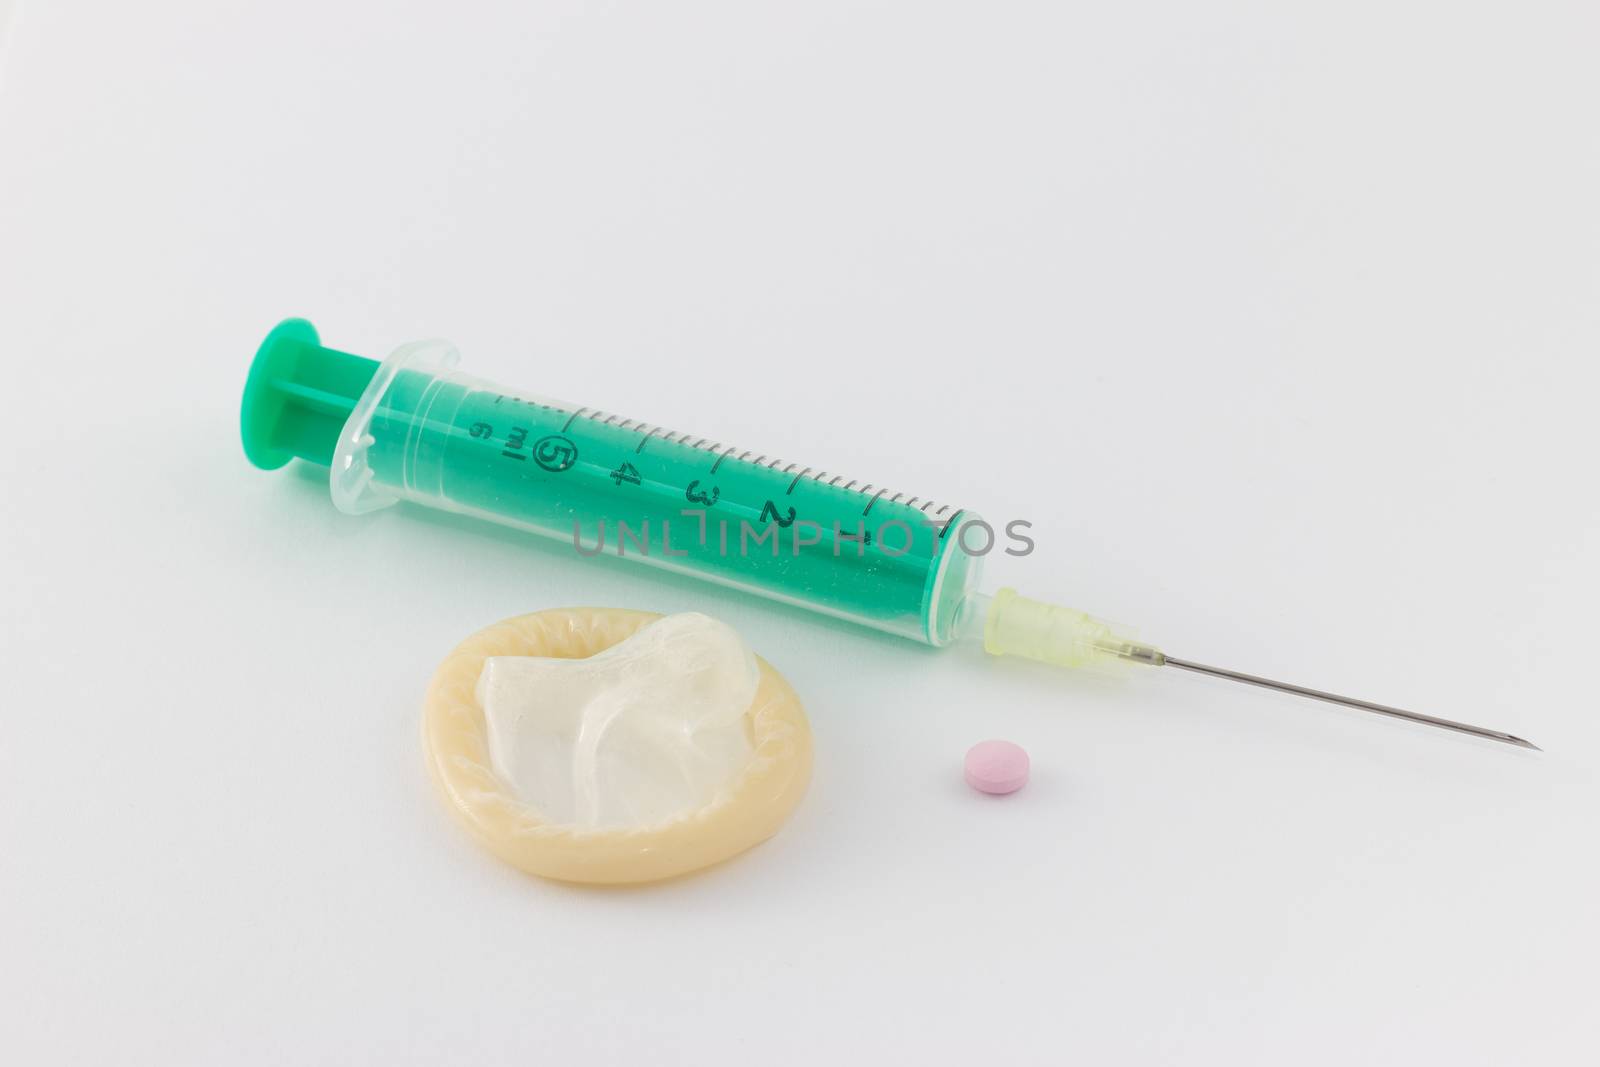 Contraceptives - Depot syringe, condom, pill